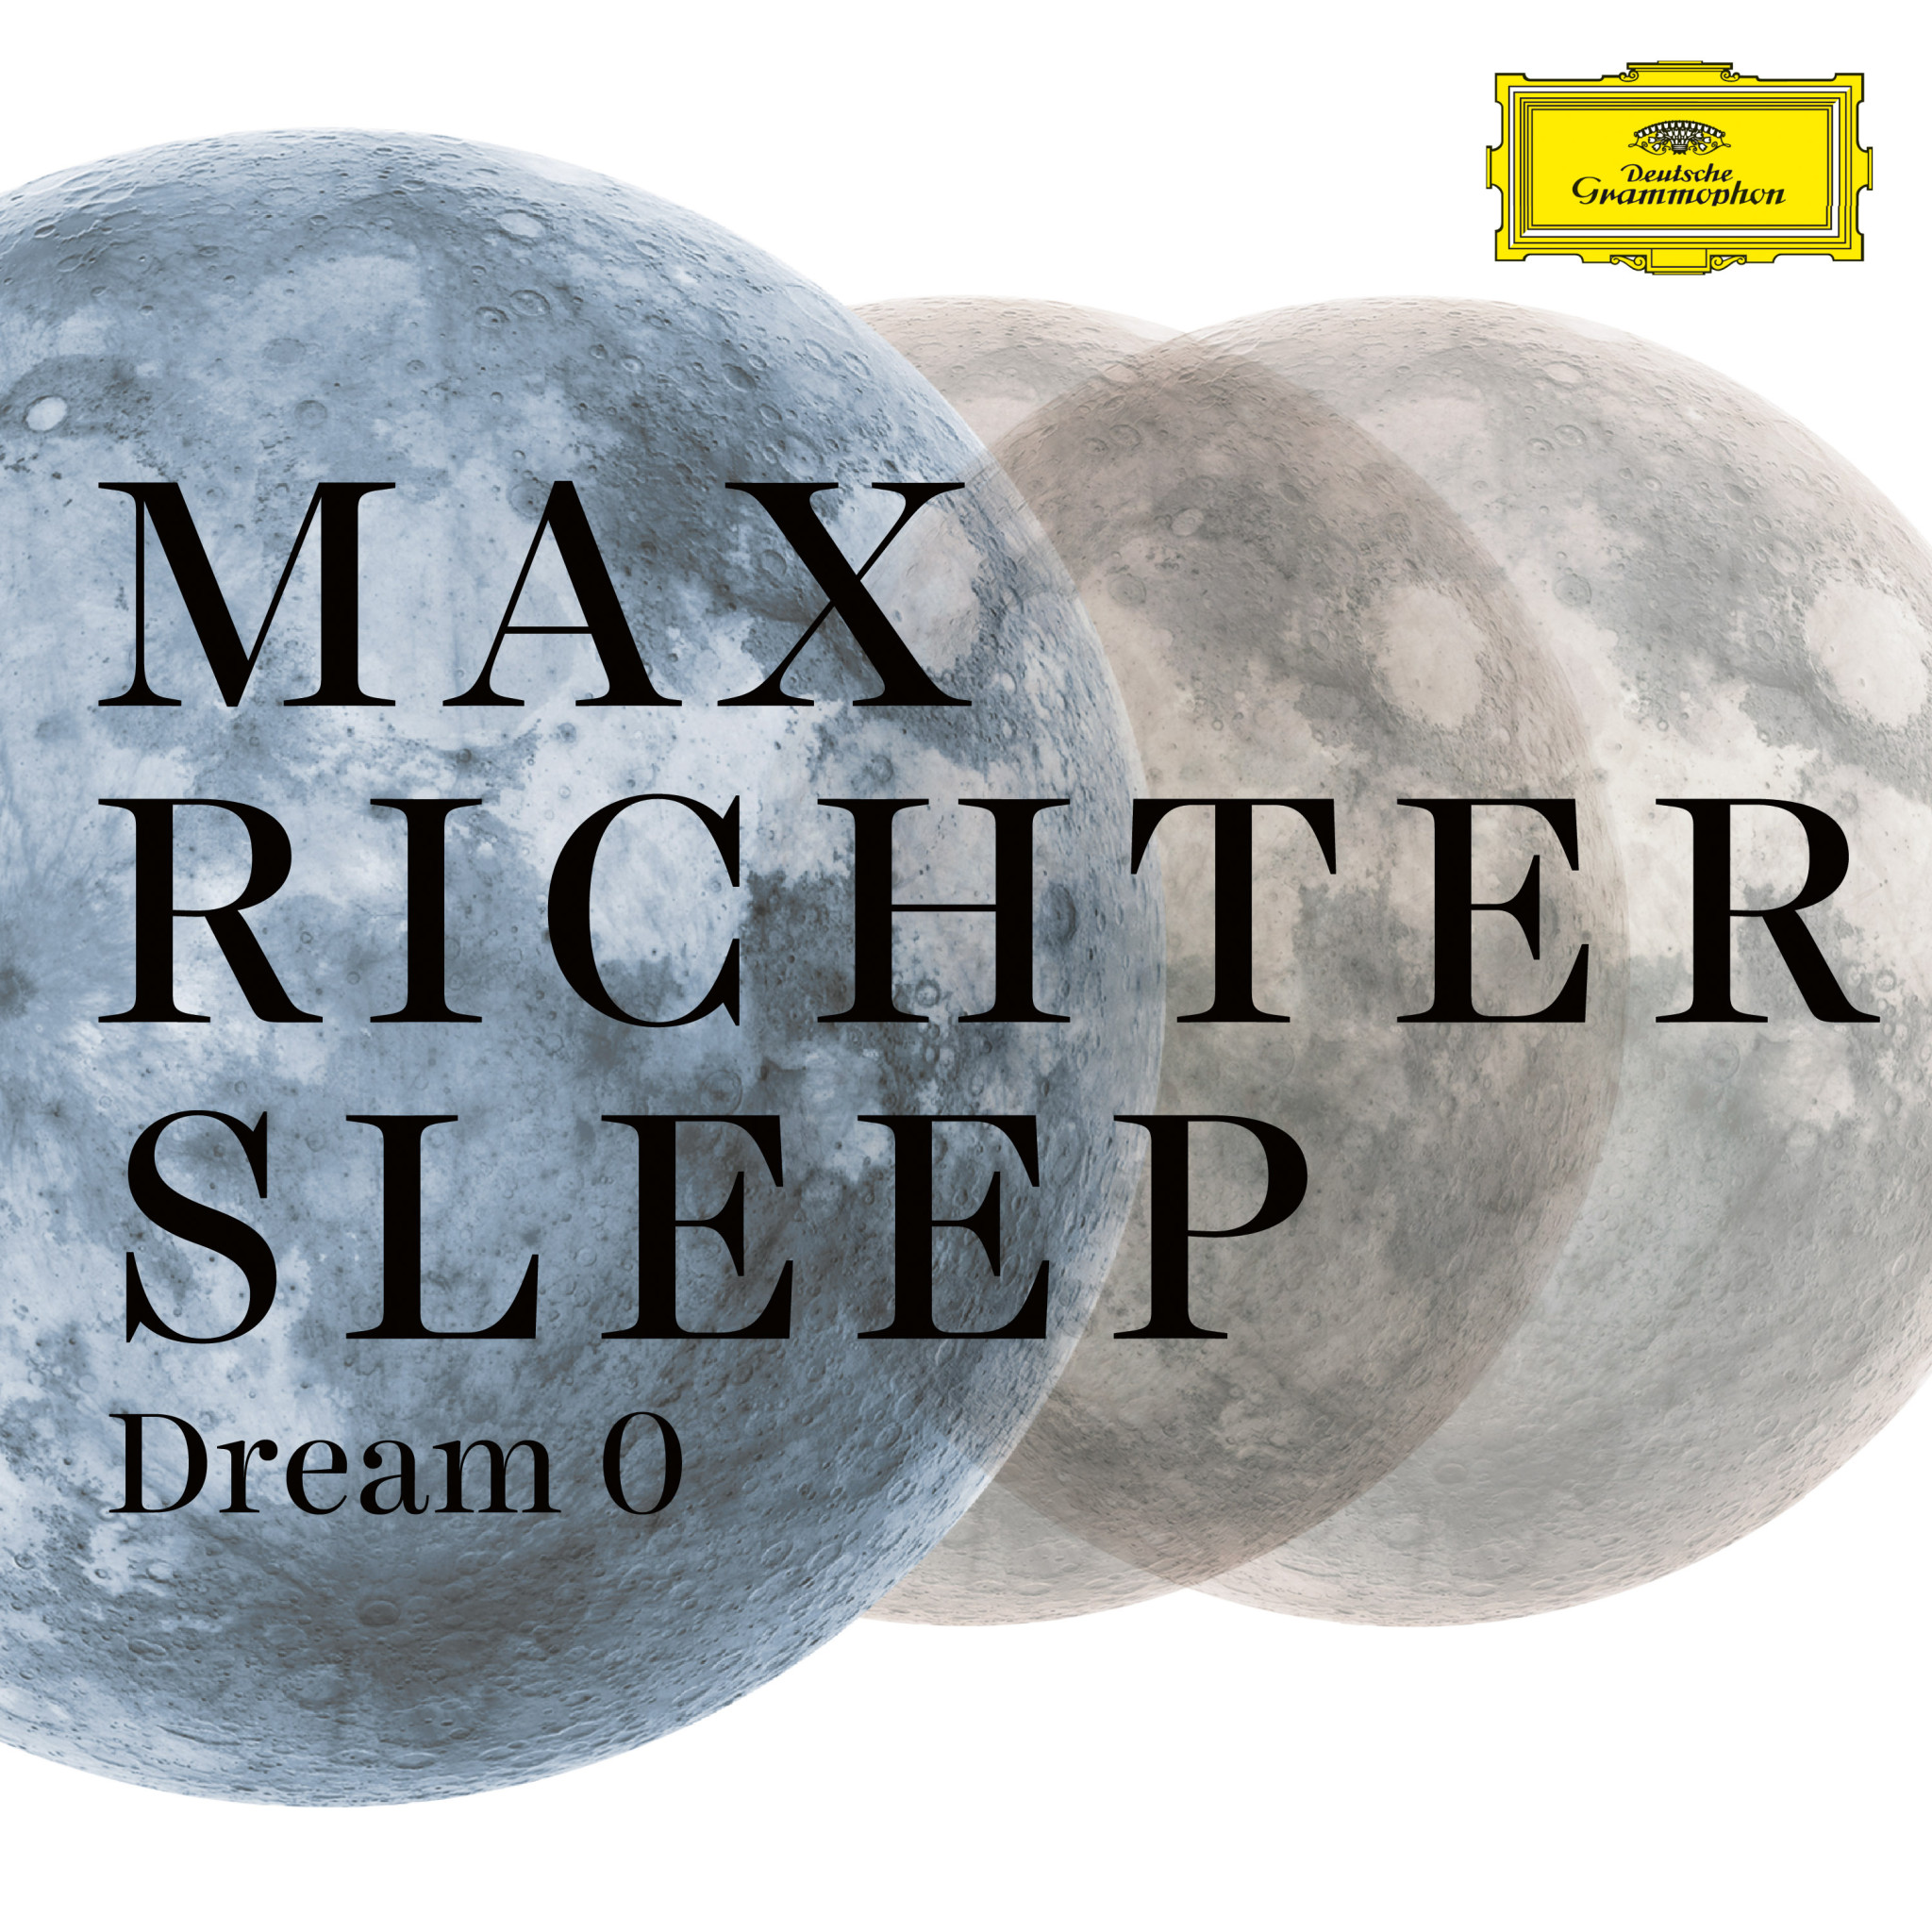 Max Richter - Dream 0 (till break of day)